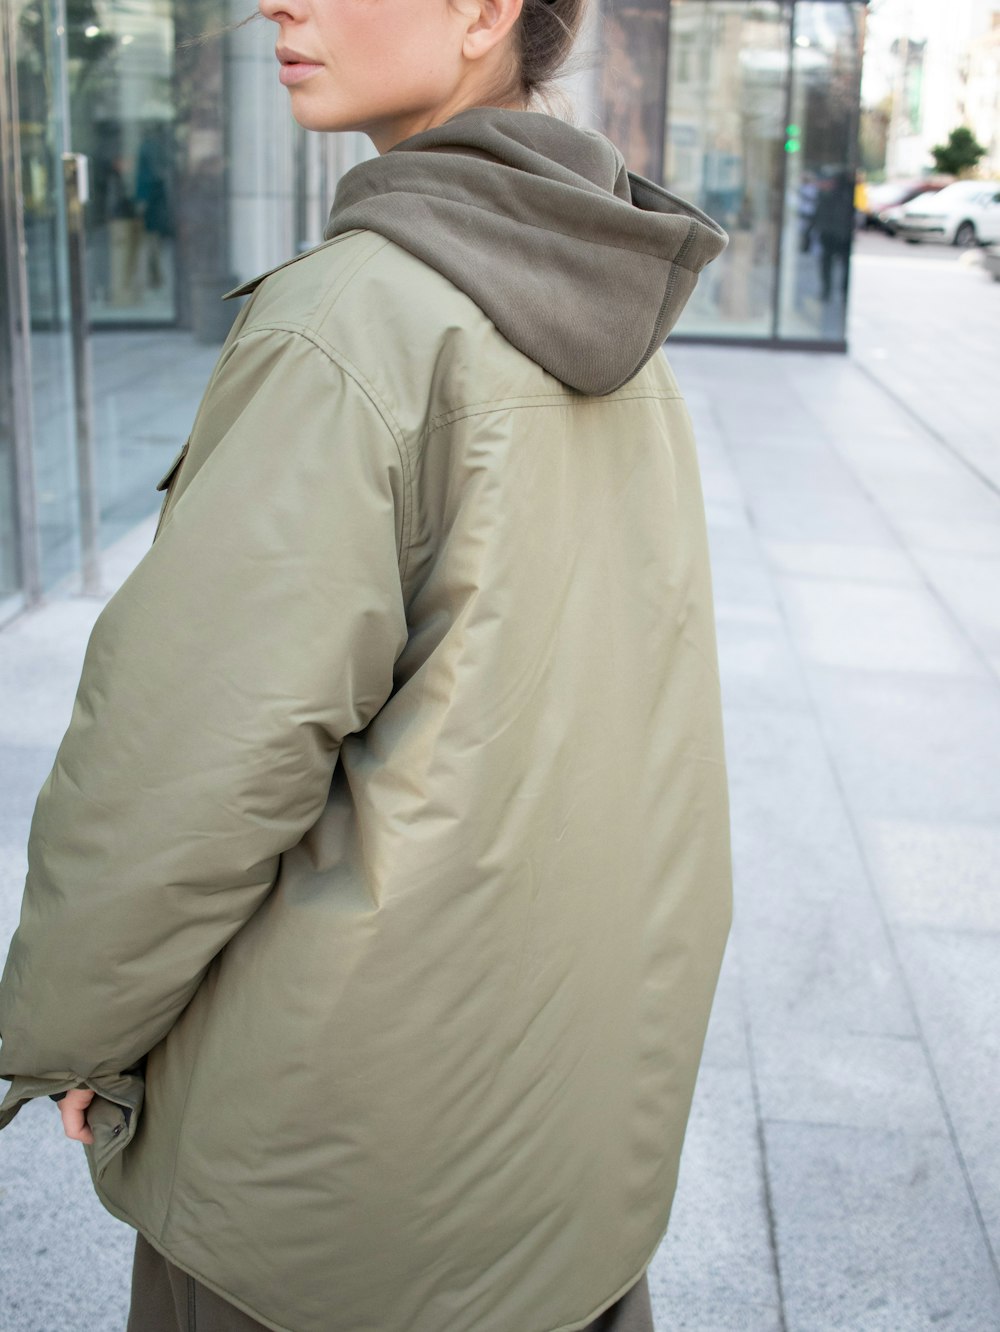 person in brown coat walking on sidewalk during daytime